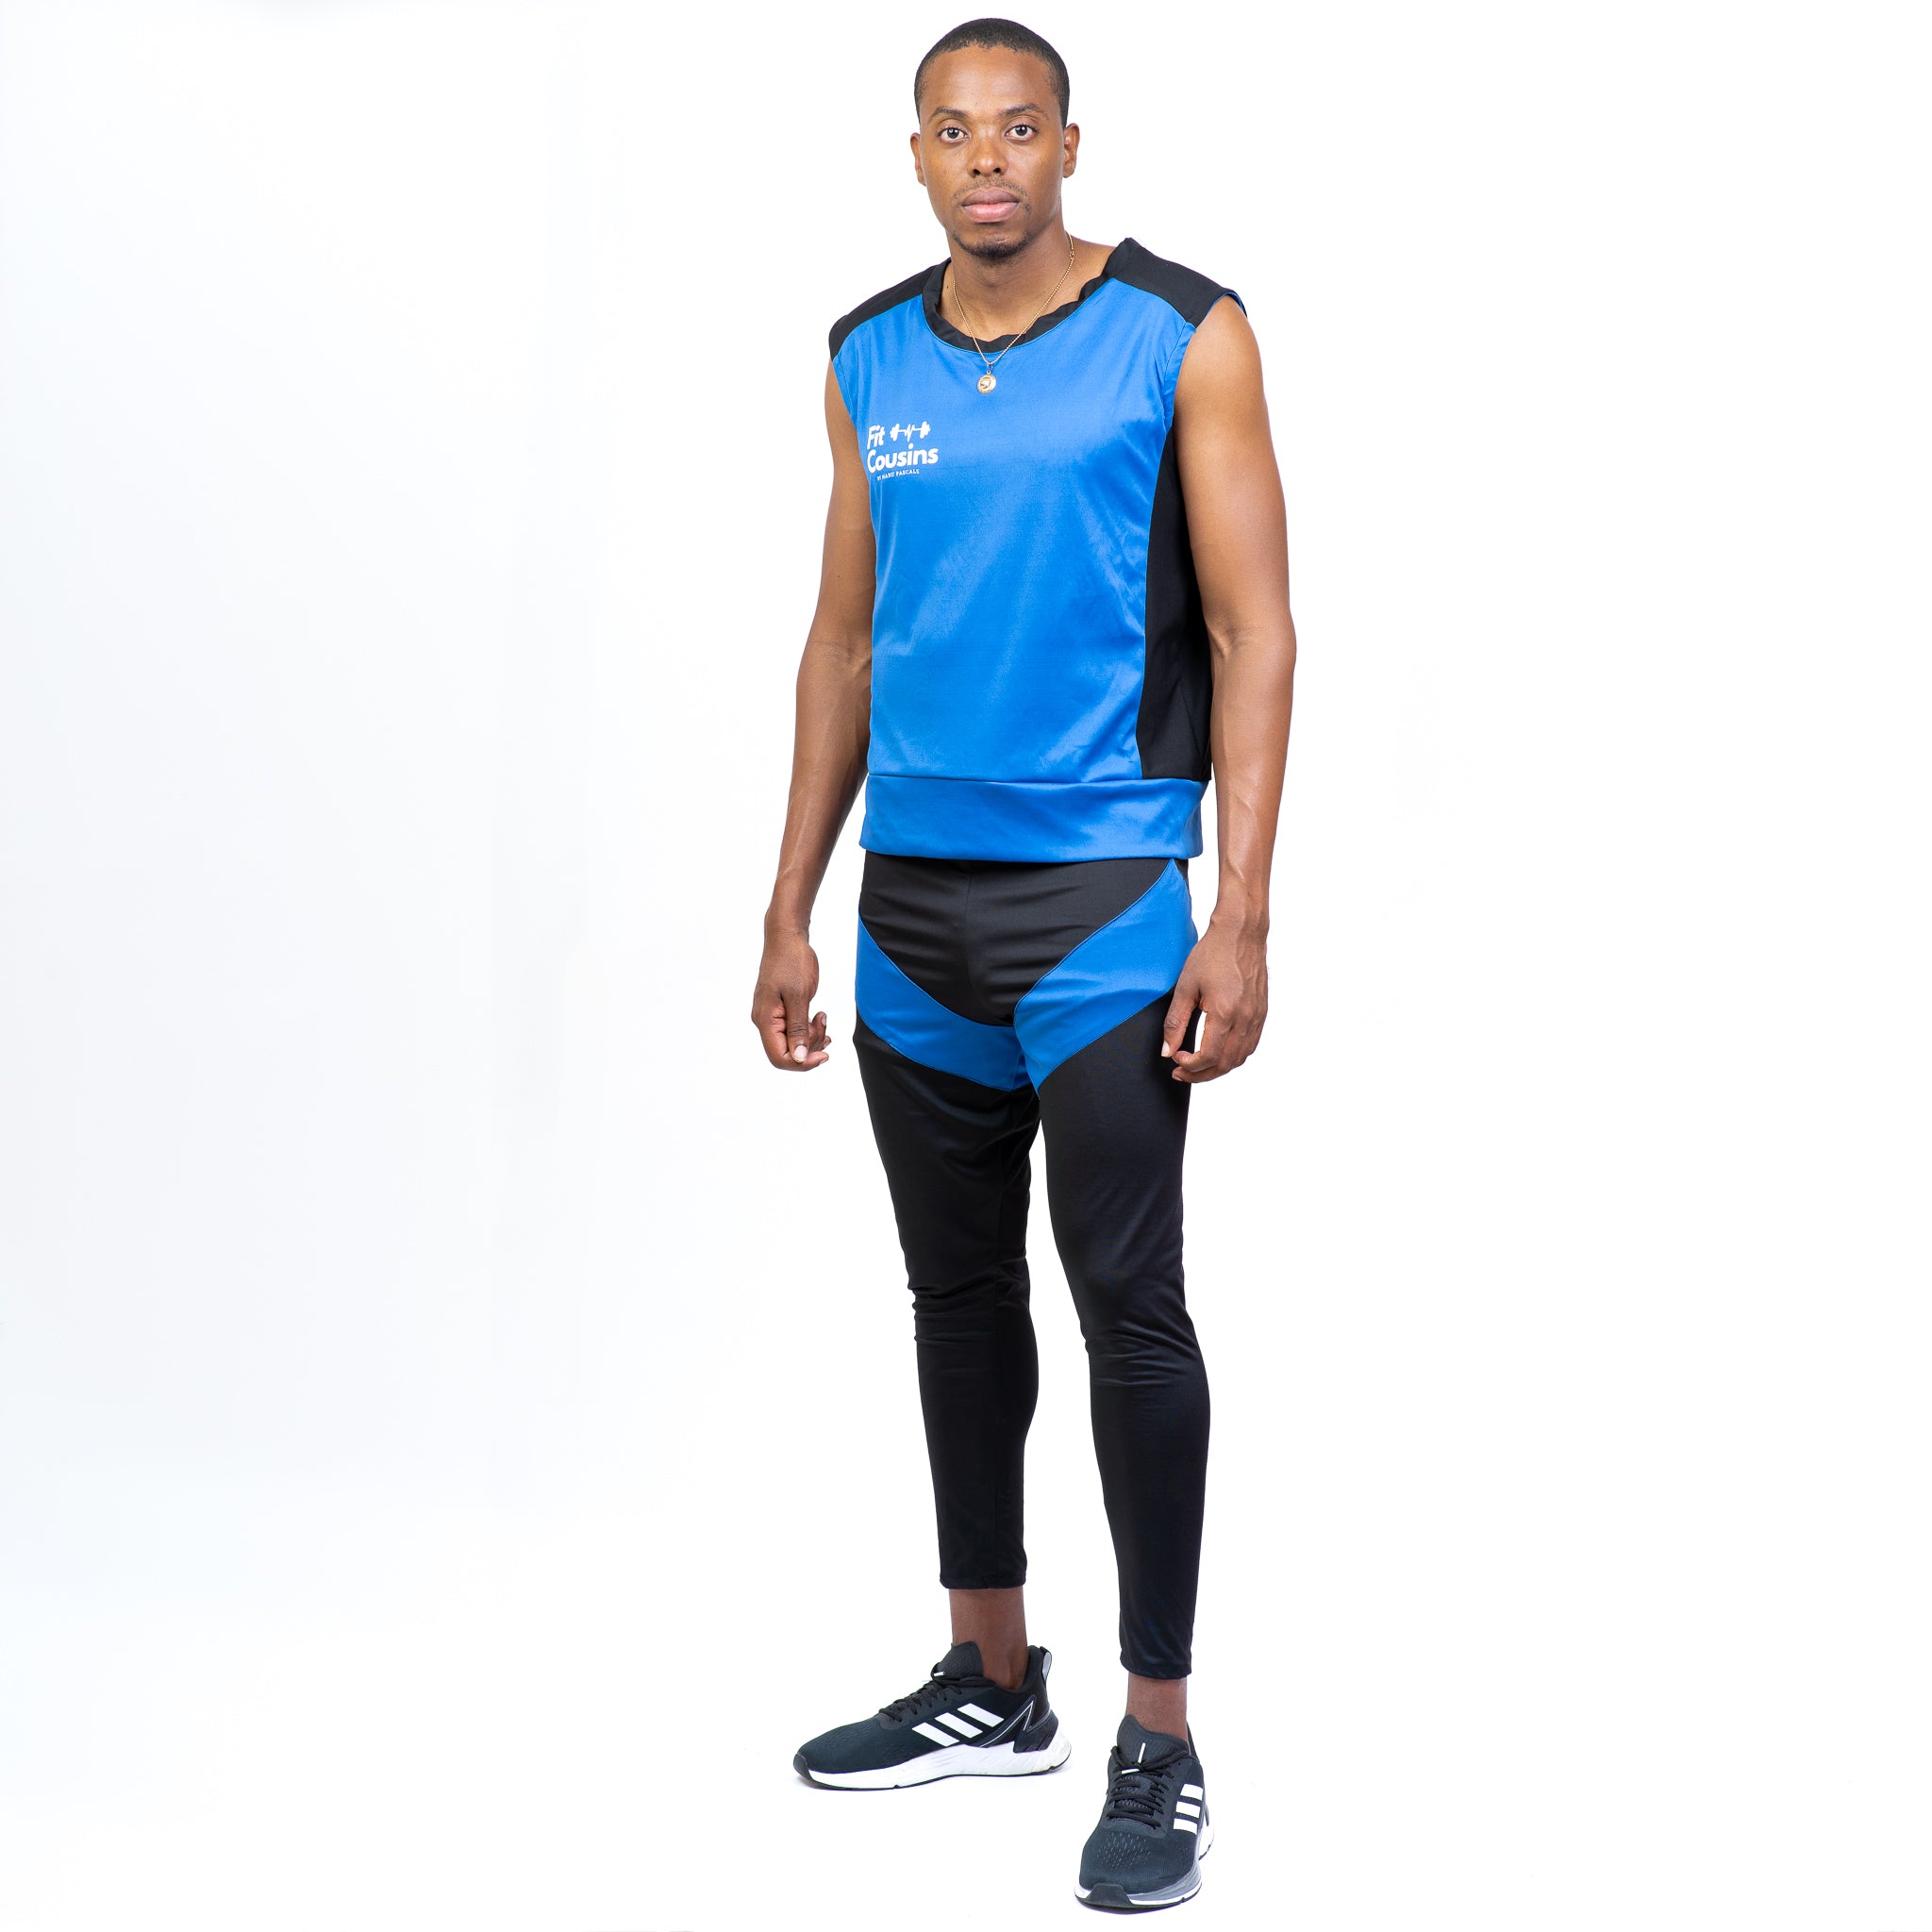 Daring Blue Men's Athletic Wear - FULL SET